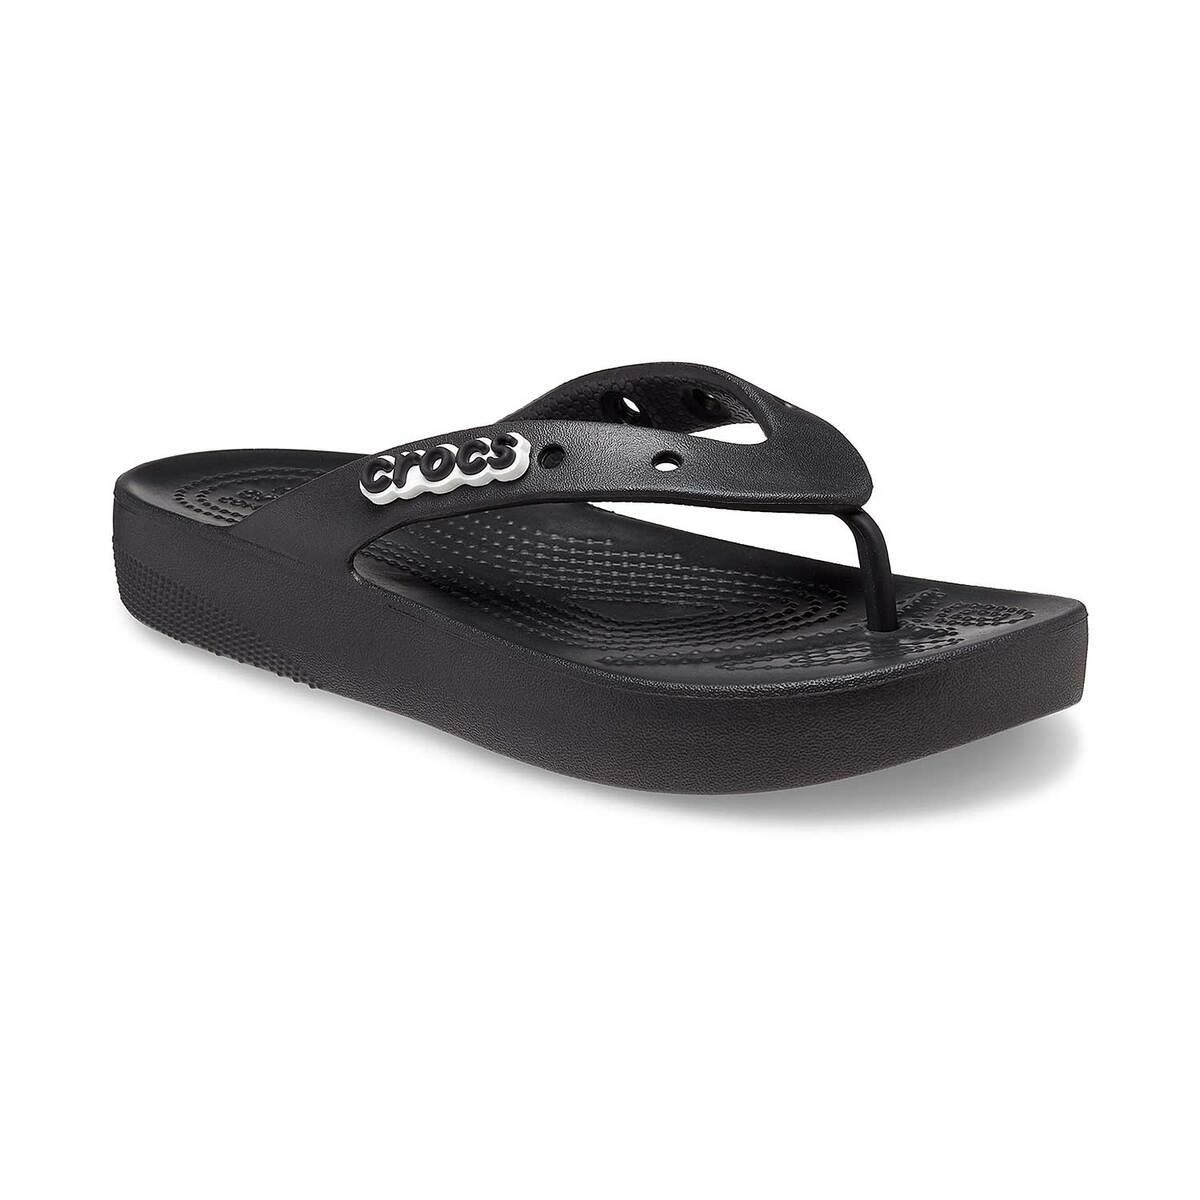 Buy Women Black Casual Slippers Online | SKU: 118-207714-001-4-Metro Shoes